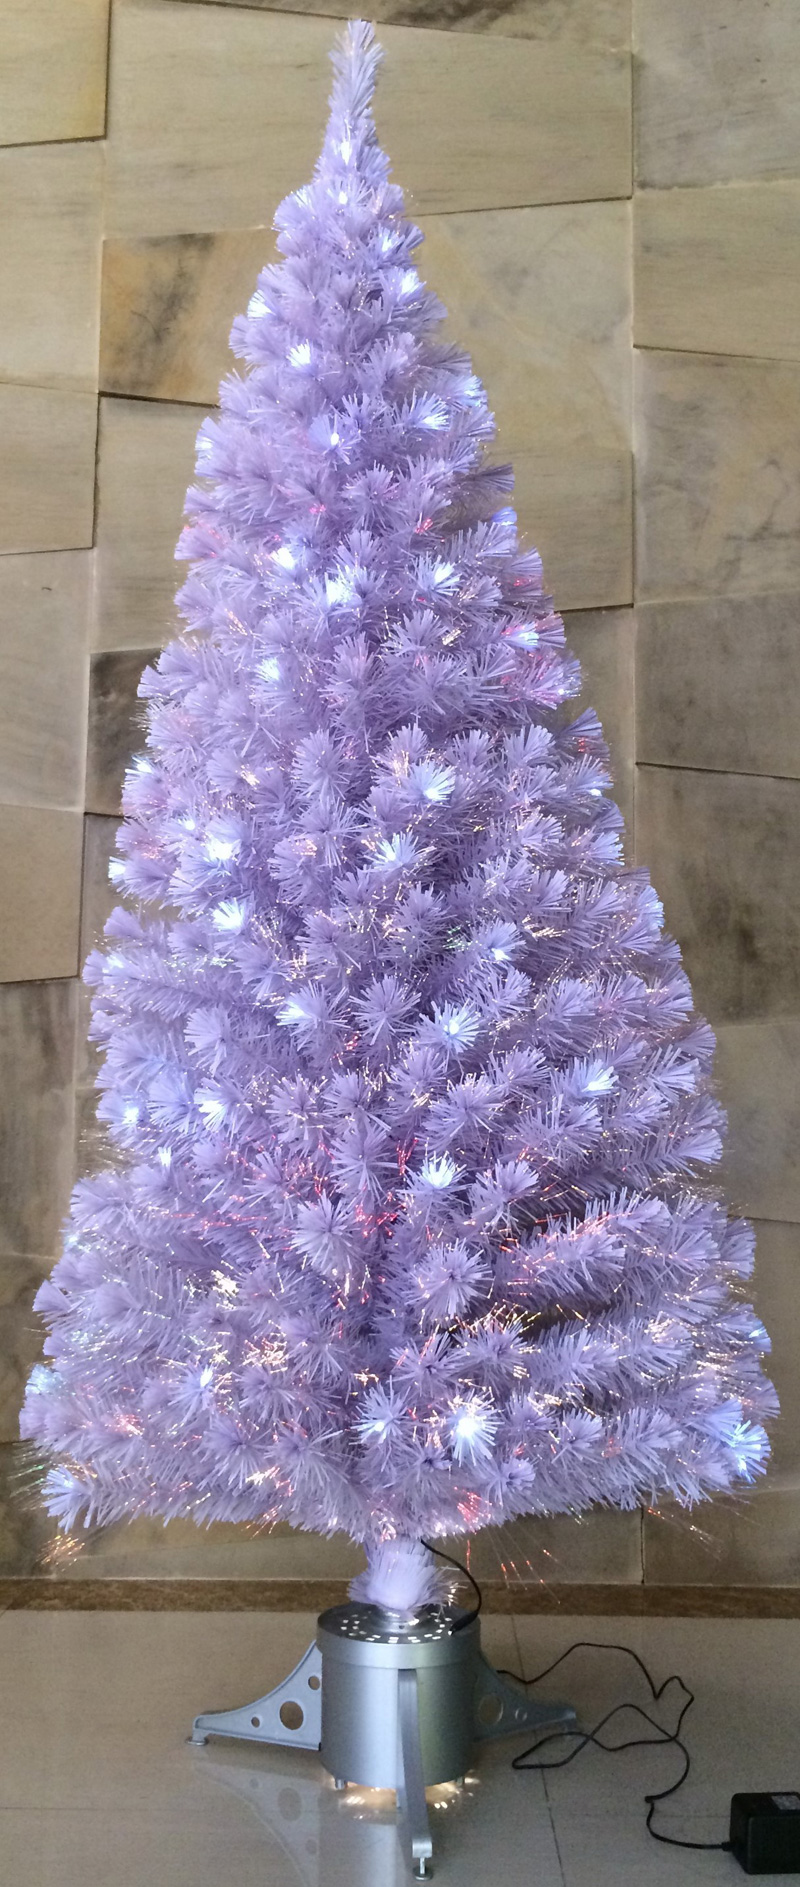 Artificial Christmas trees